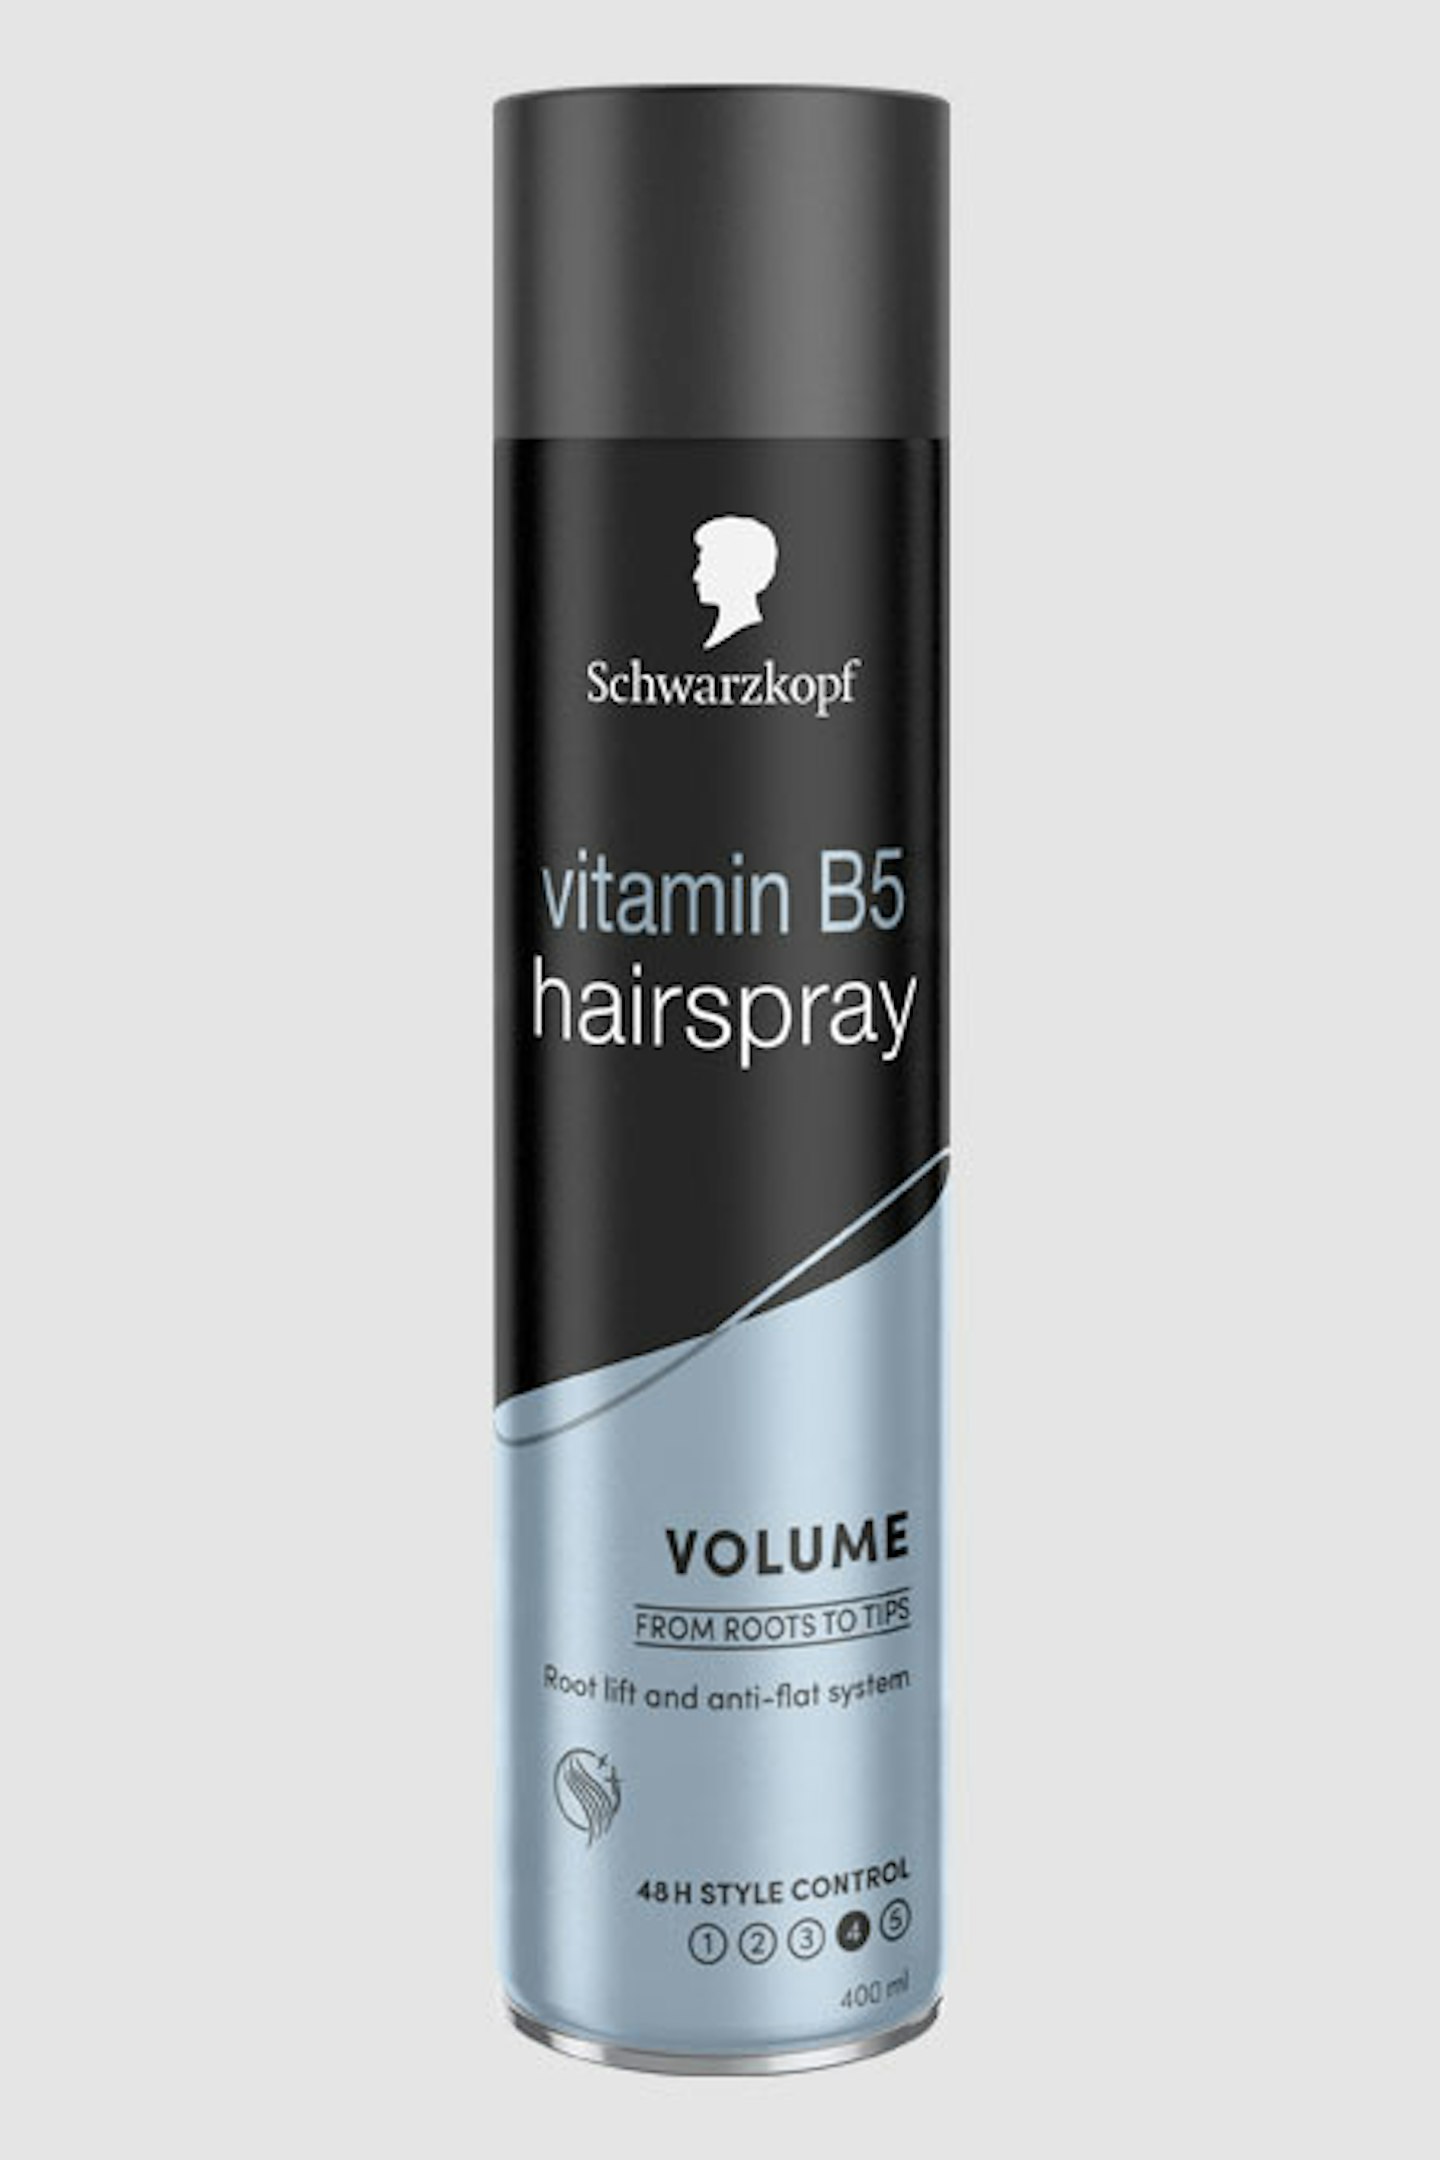 Schwarzkopf Vitamin B5 Hairspray